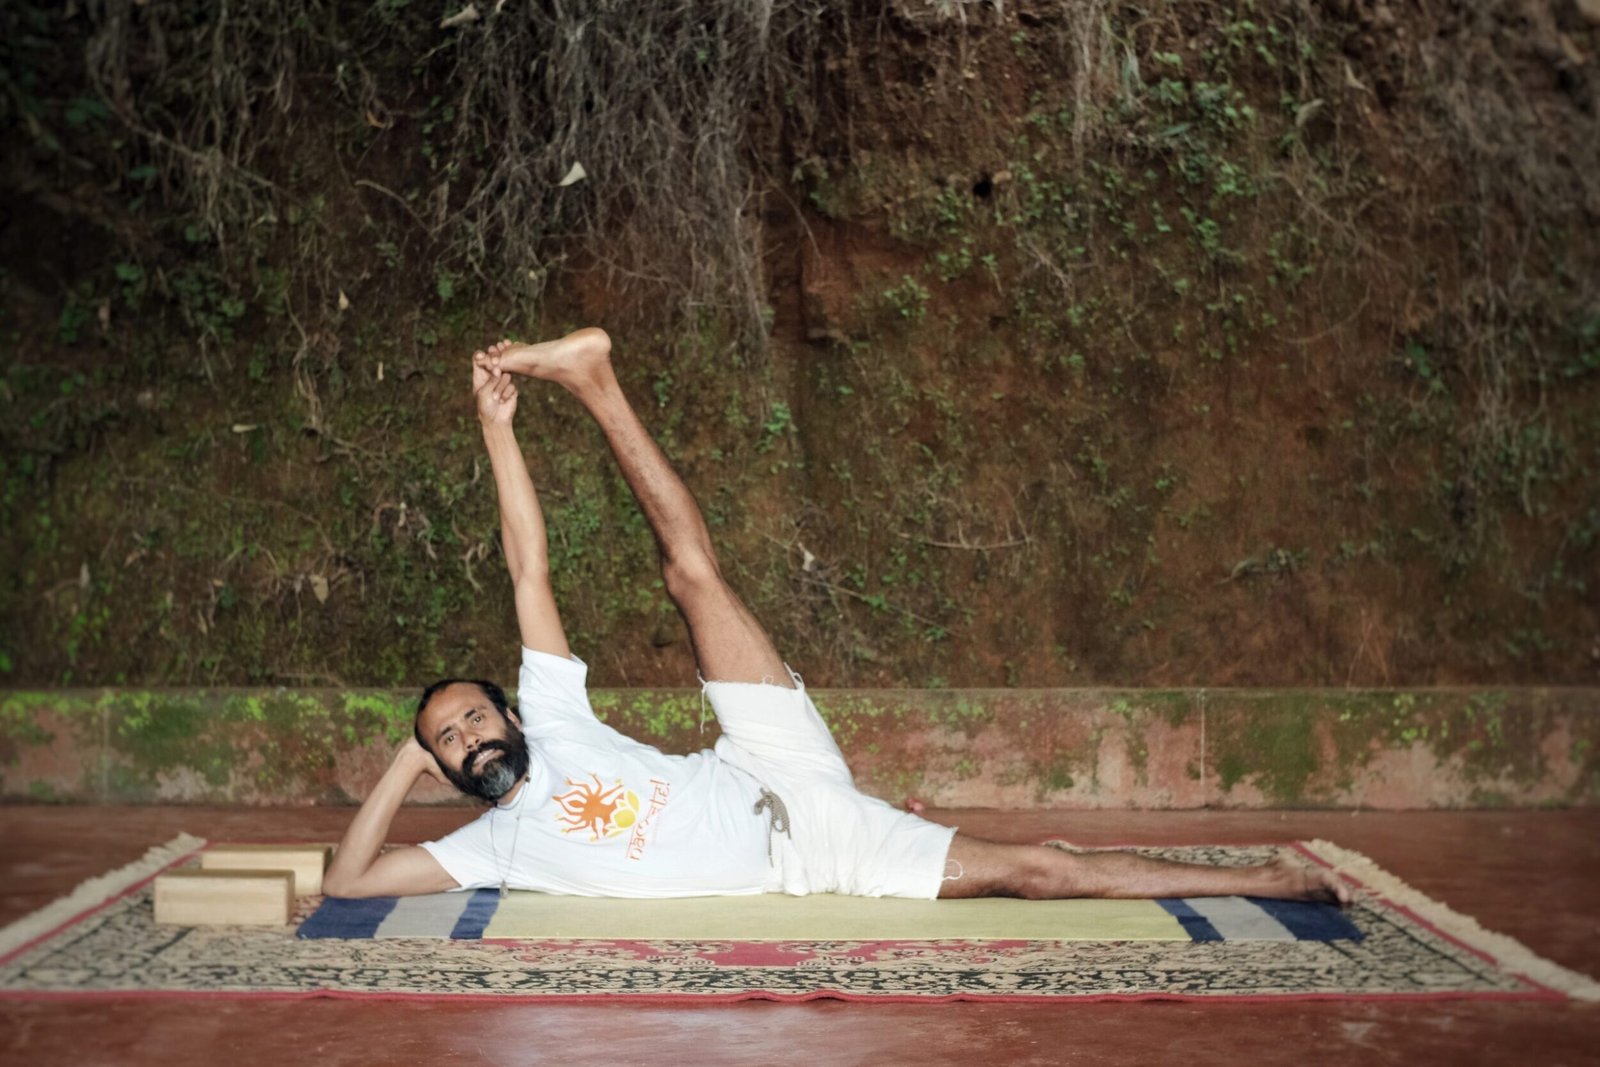 How to do Anantasana (Sleeping Vishnu Pose) Step by Step with Master Dharm  - YouTube